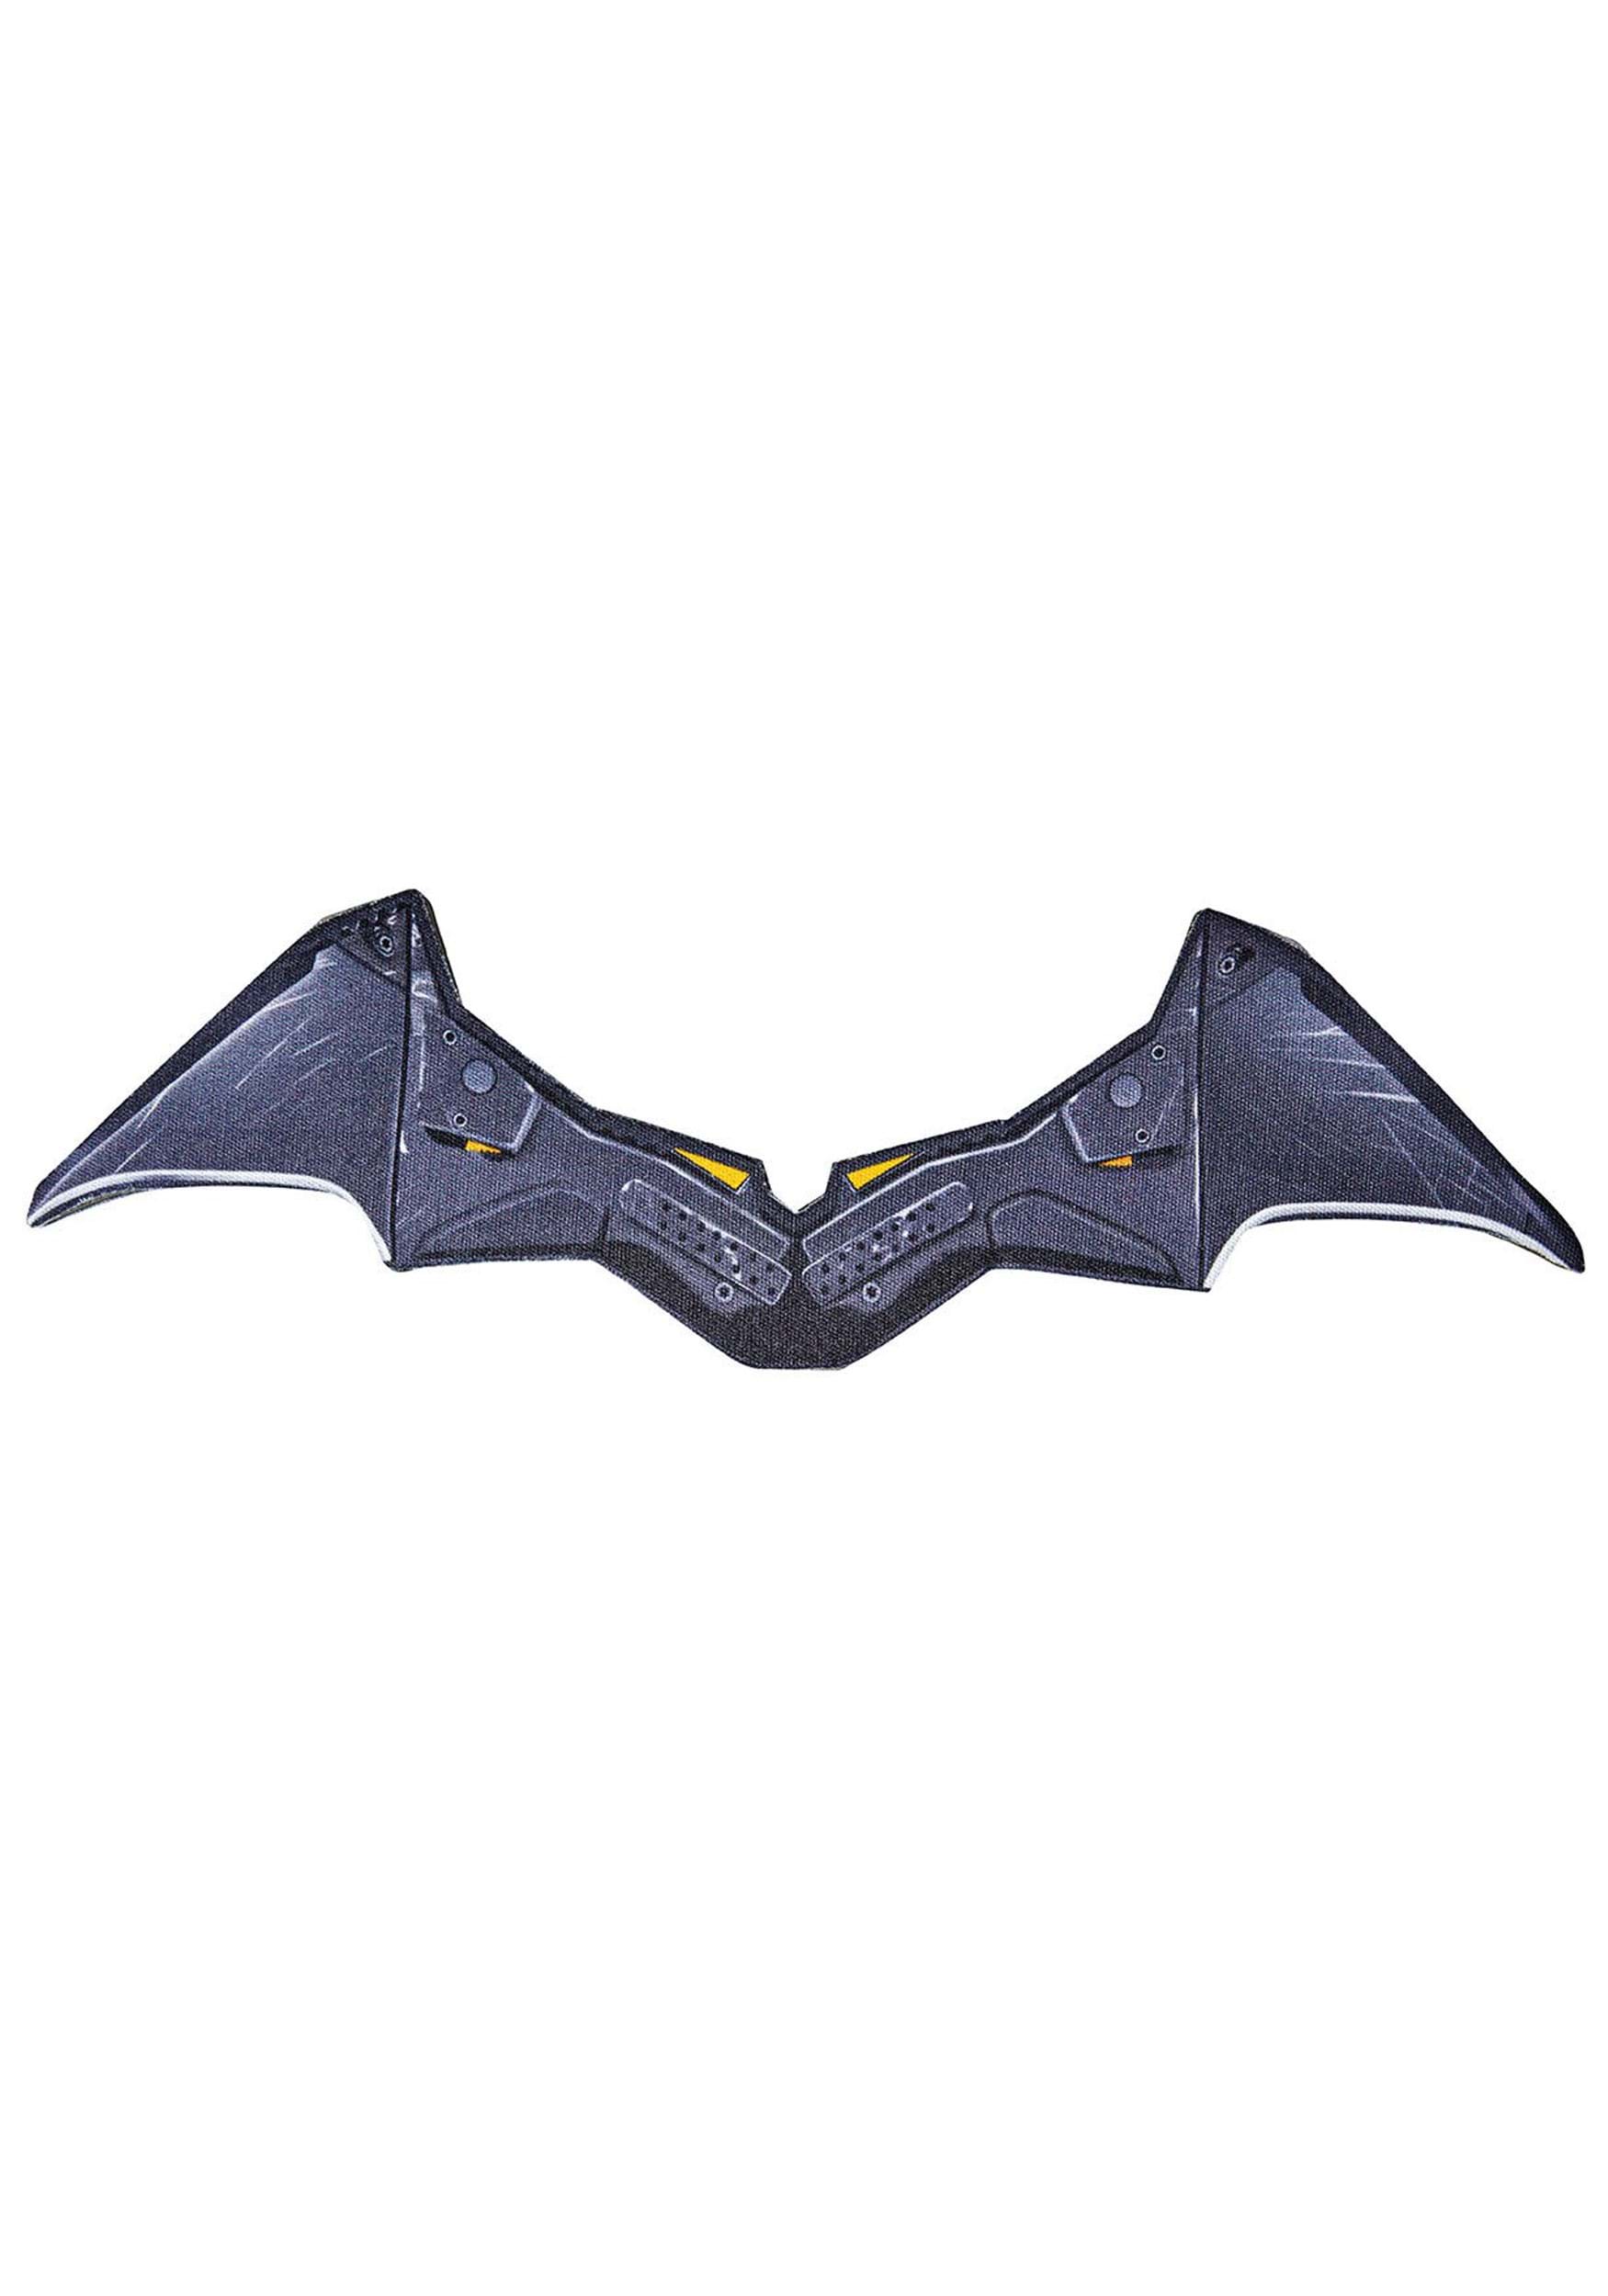 The Batman Batarang Weapon